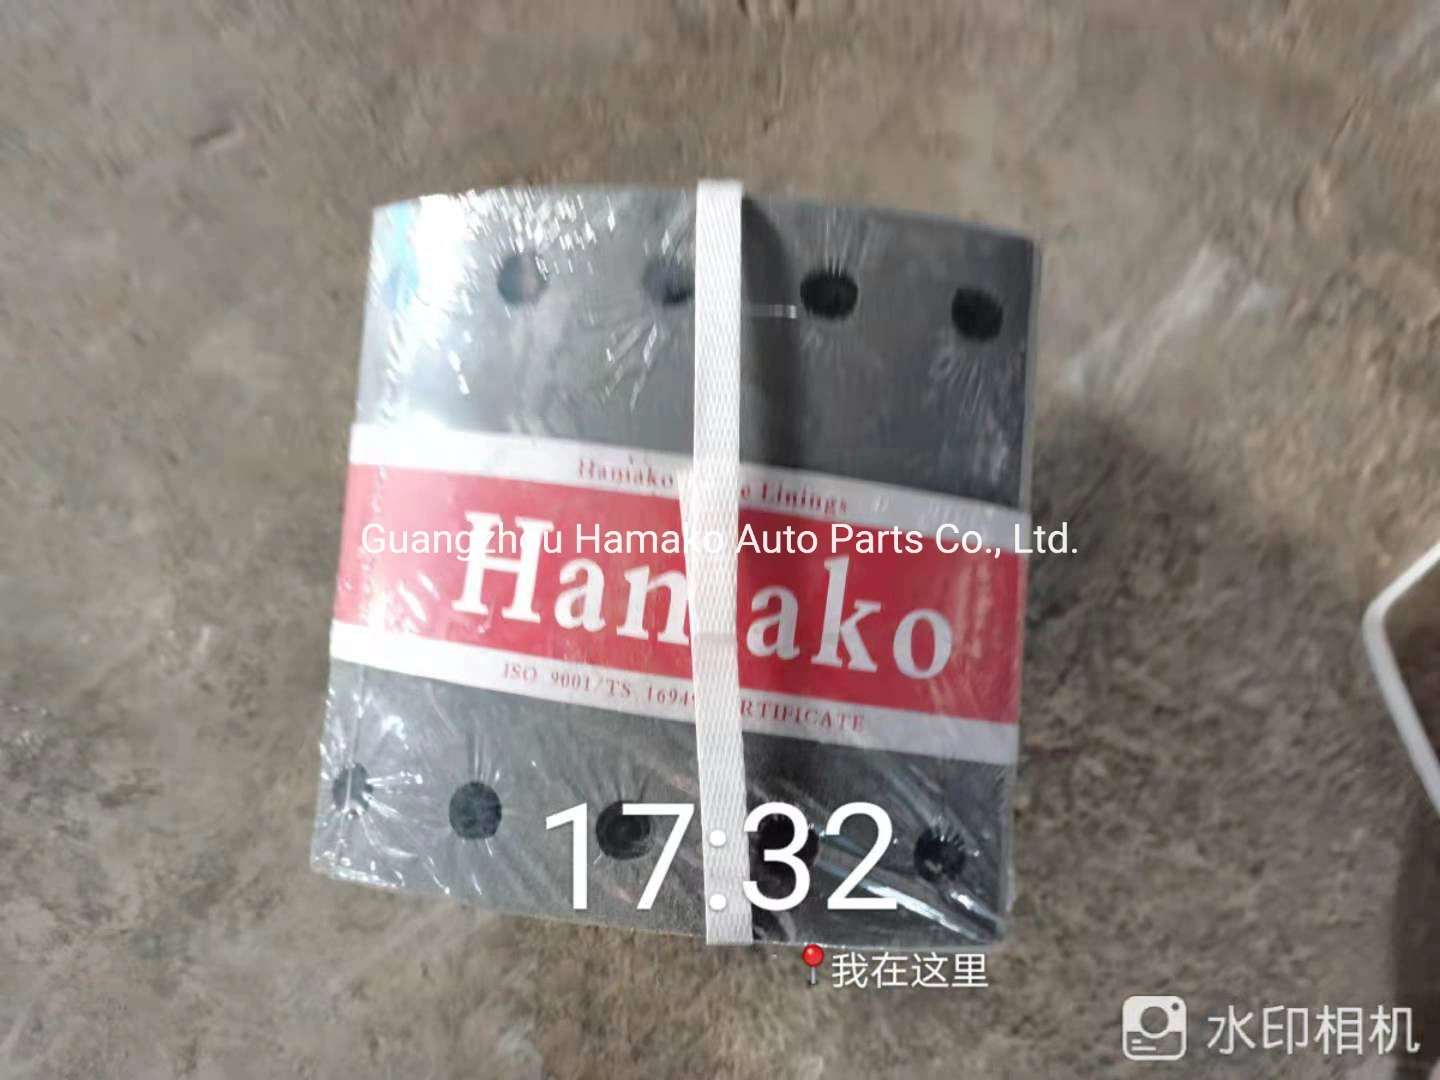 Japanese Truck Nkr Semi Metallic Asbestos Ceramic Brake Lining 4PCS/Set